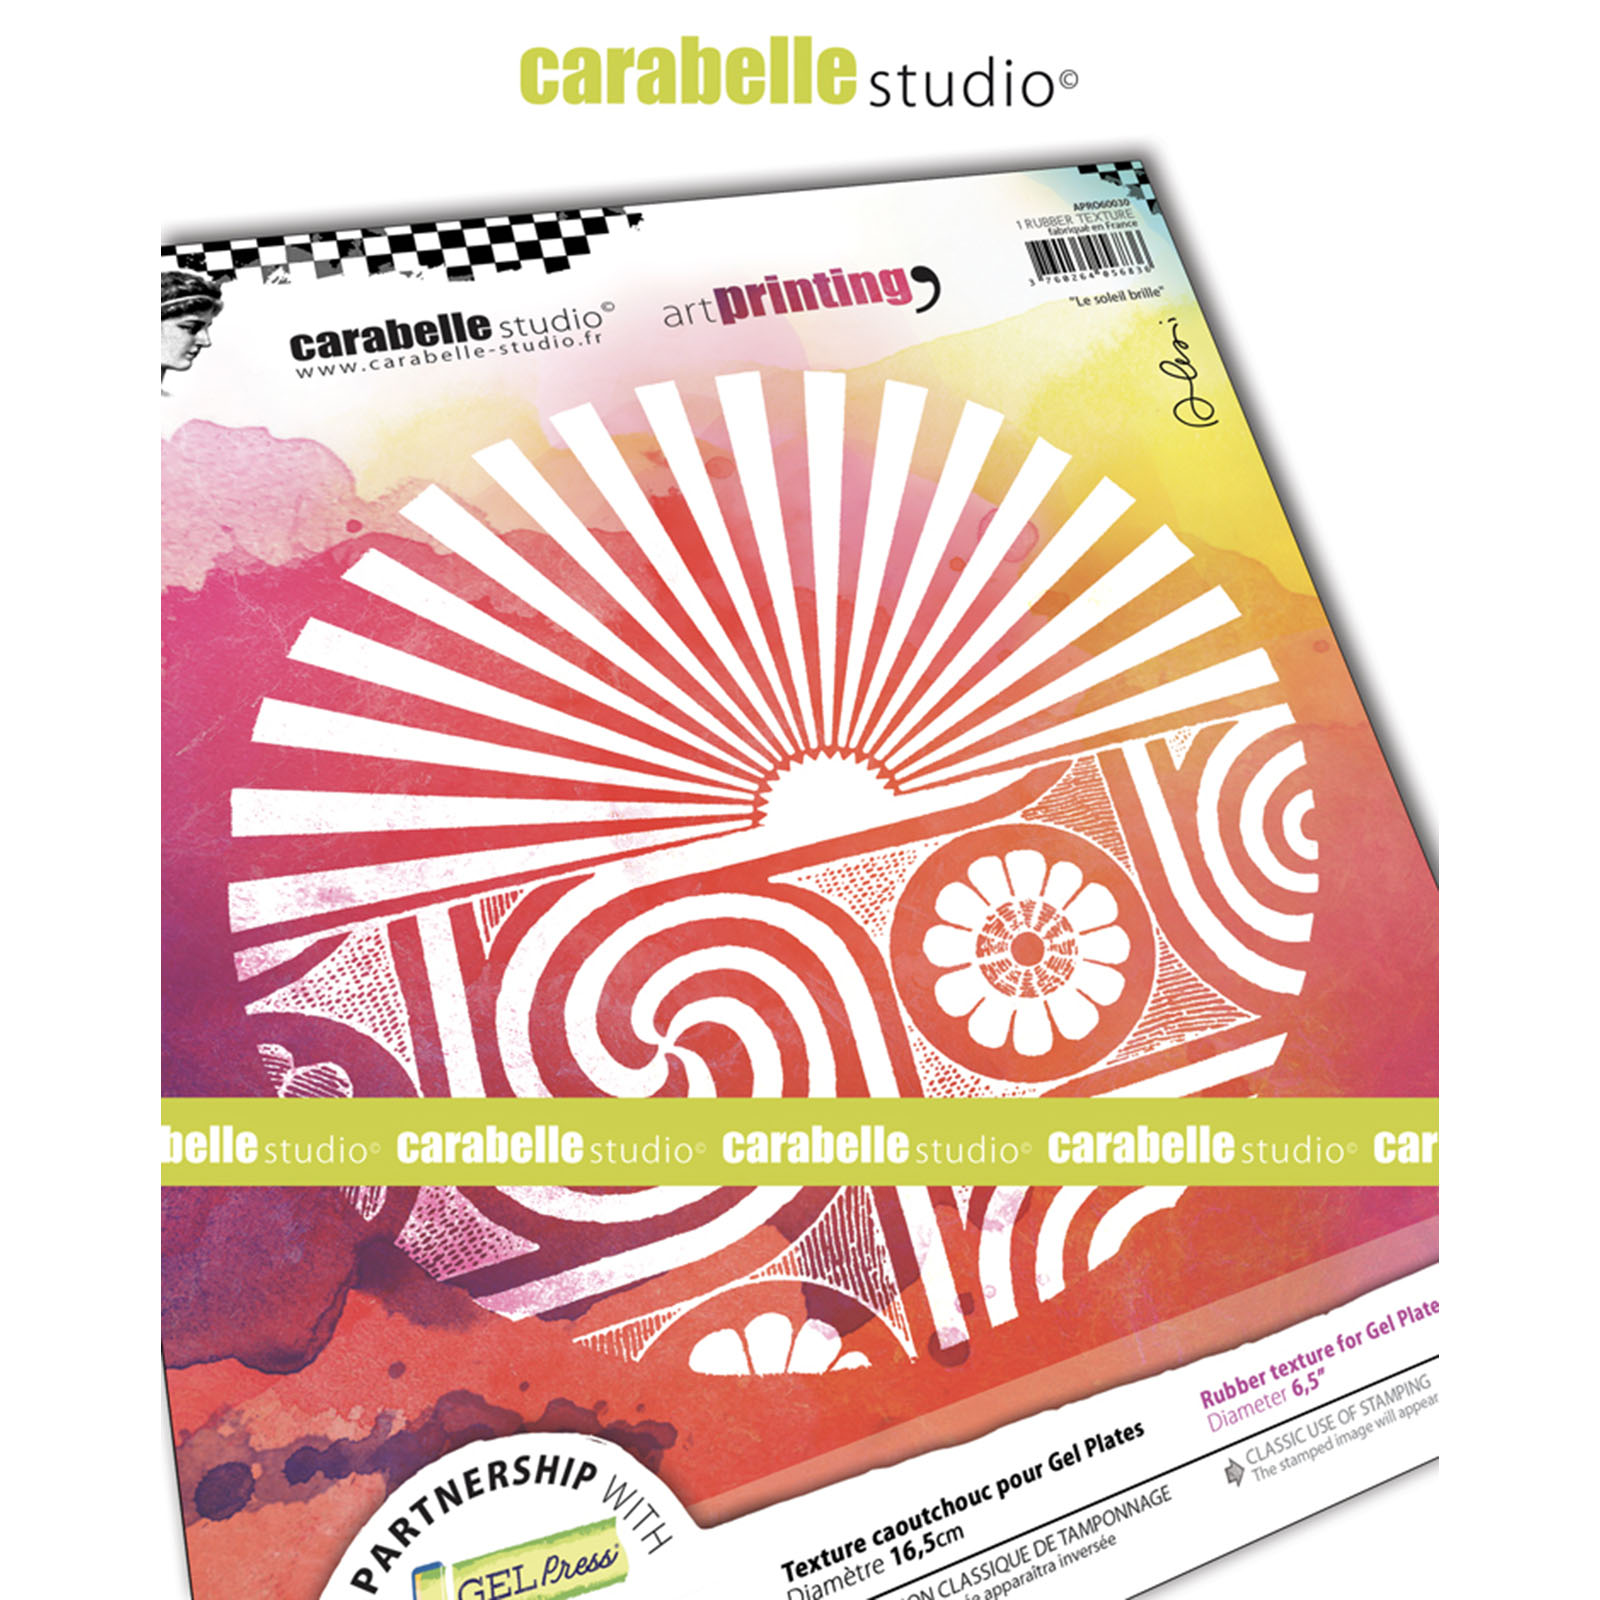 Carabelle Studio • Art printing rond le soleil brille